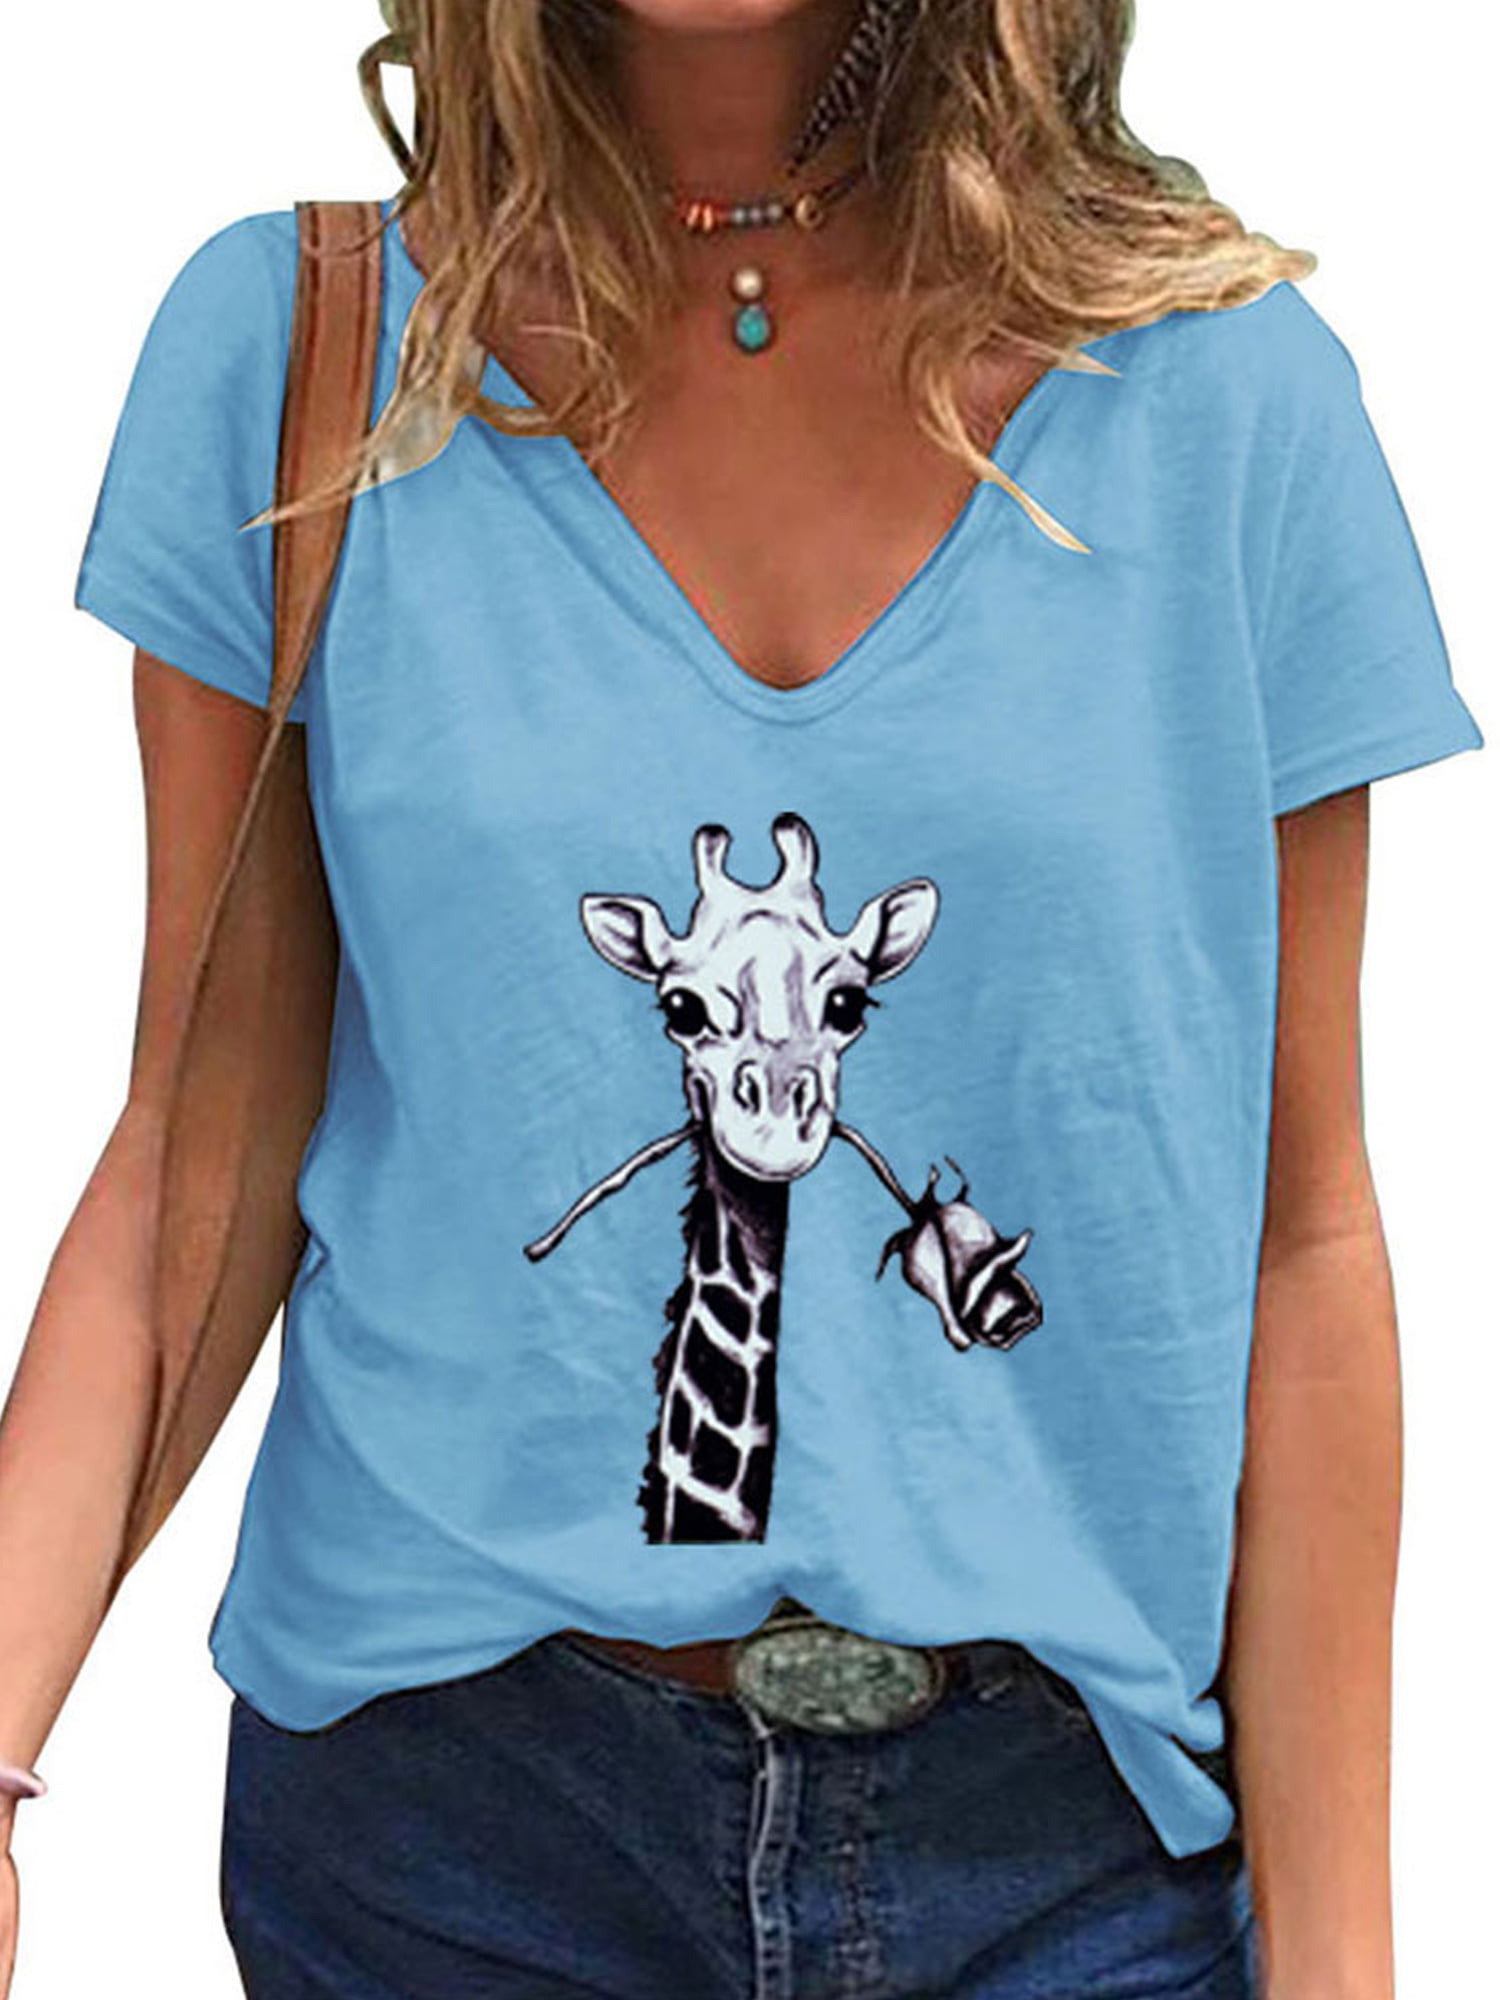 I Heart Love Giraffes Womens Tee Shirt Pick Size Color Petite Regular